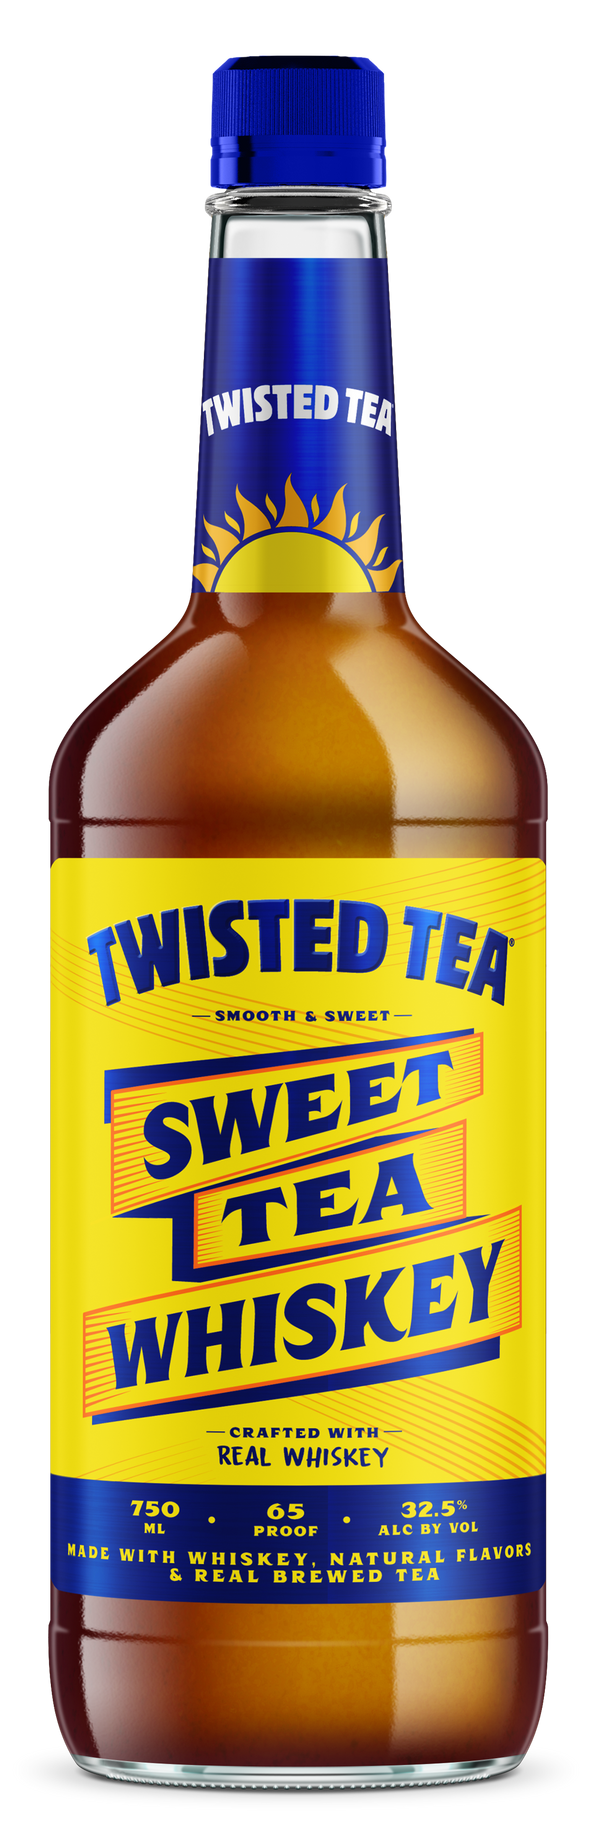 TWISTED TEA WHISKEY